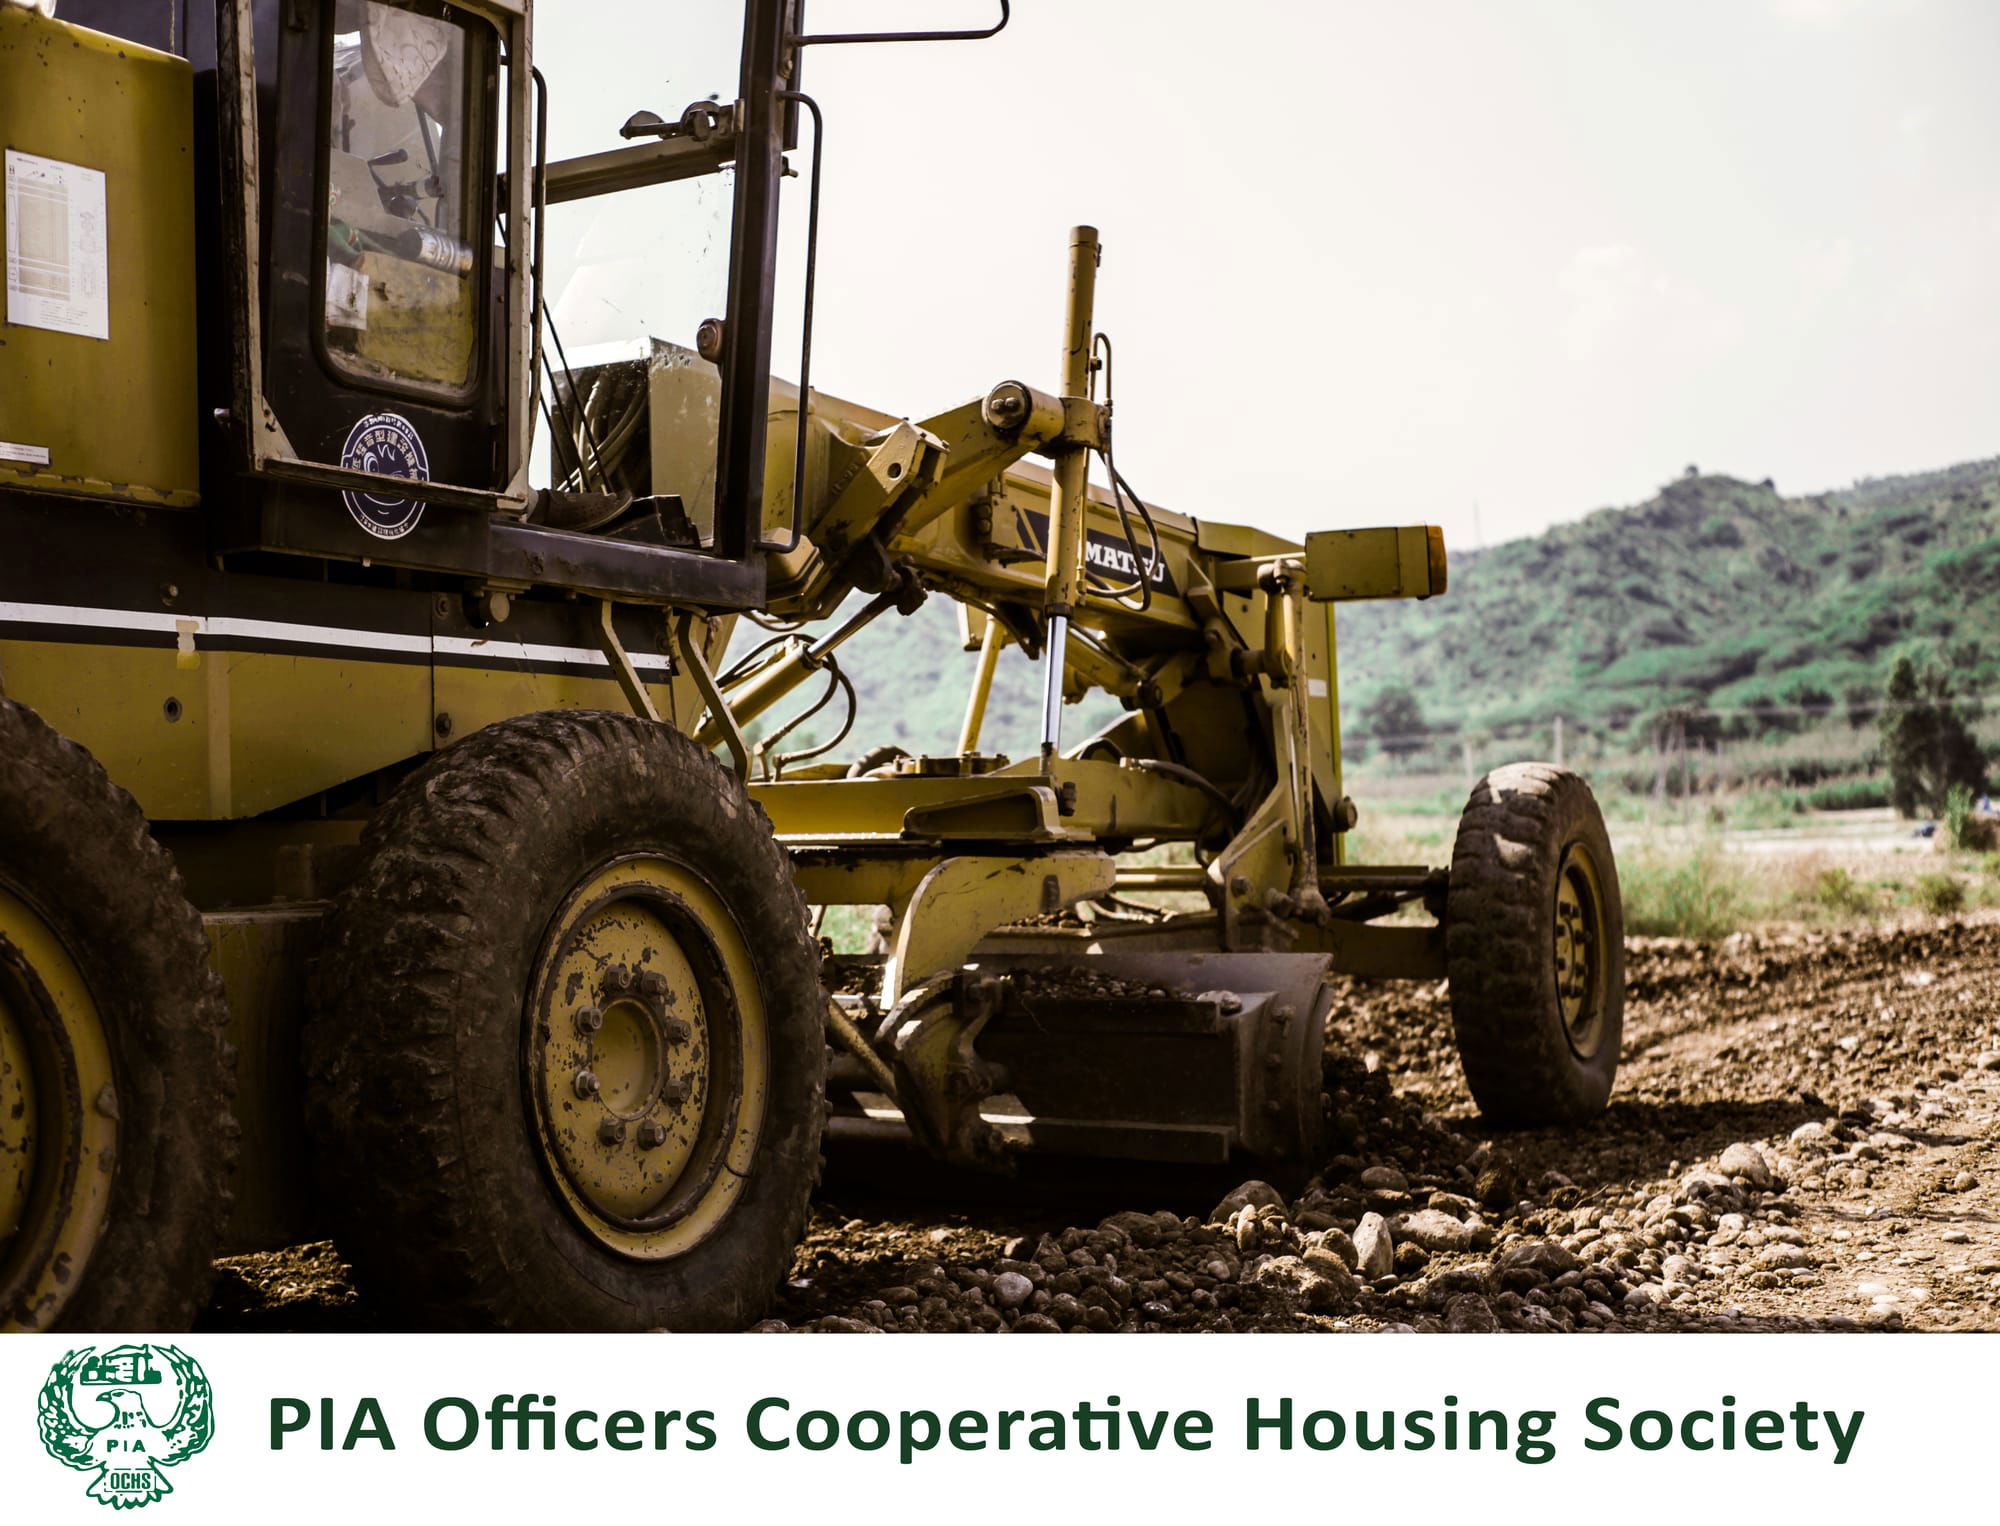 PIA Housing Society